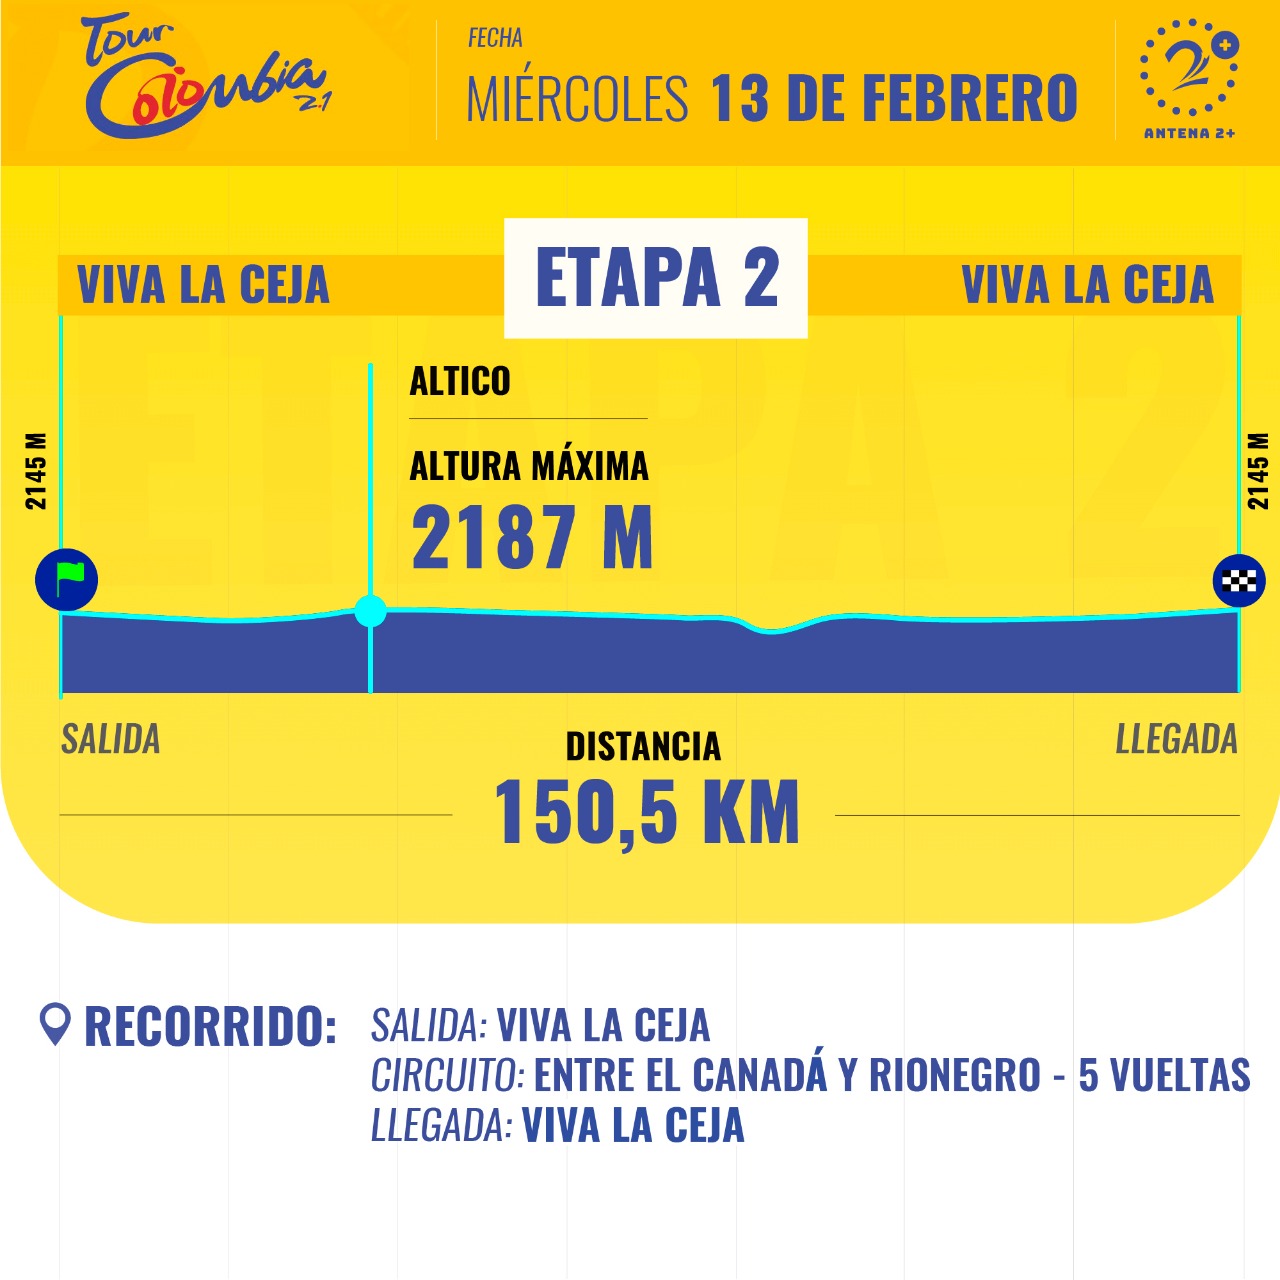 Tour Colombia 2.1 - Segunda etapa Antena 2